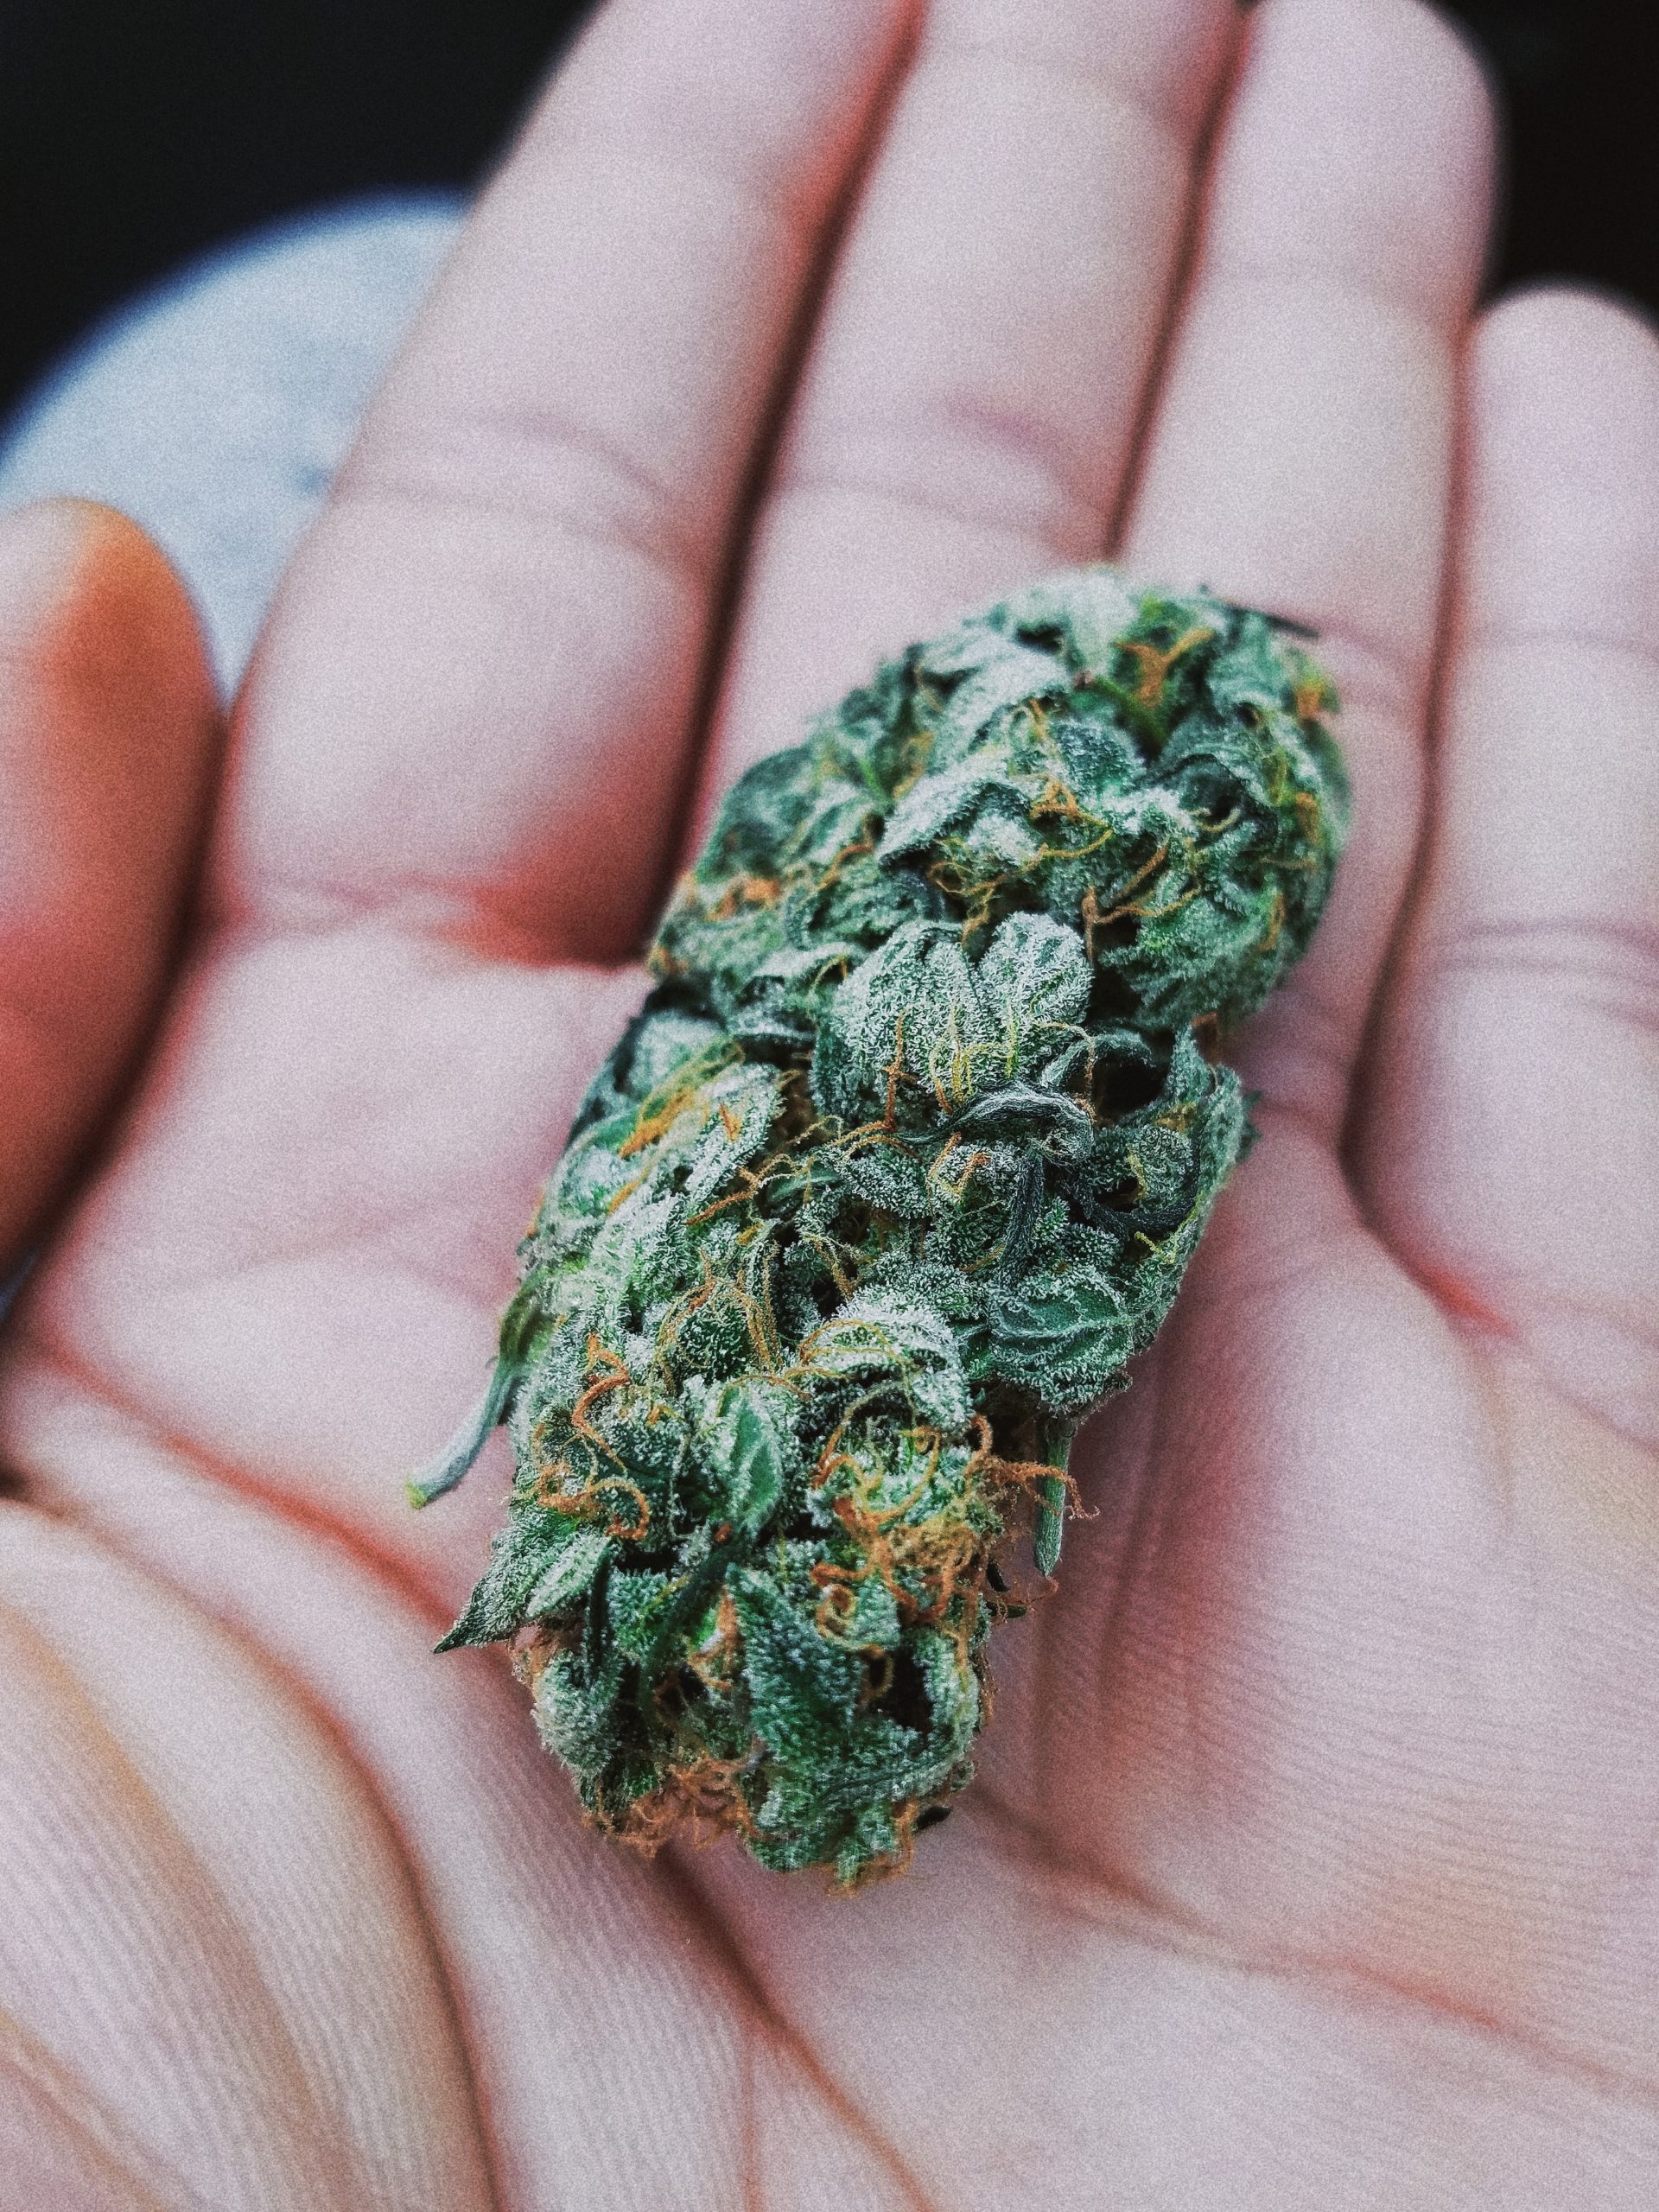 hands holding cannabis flower